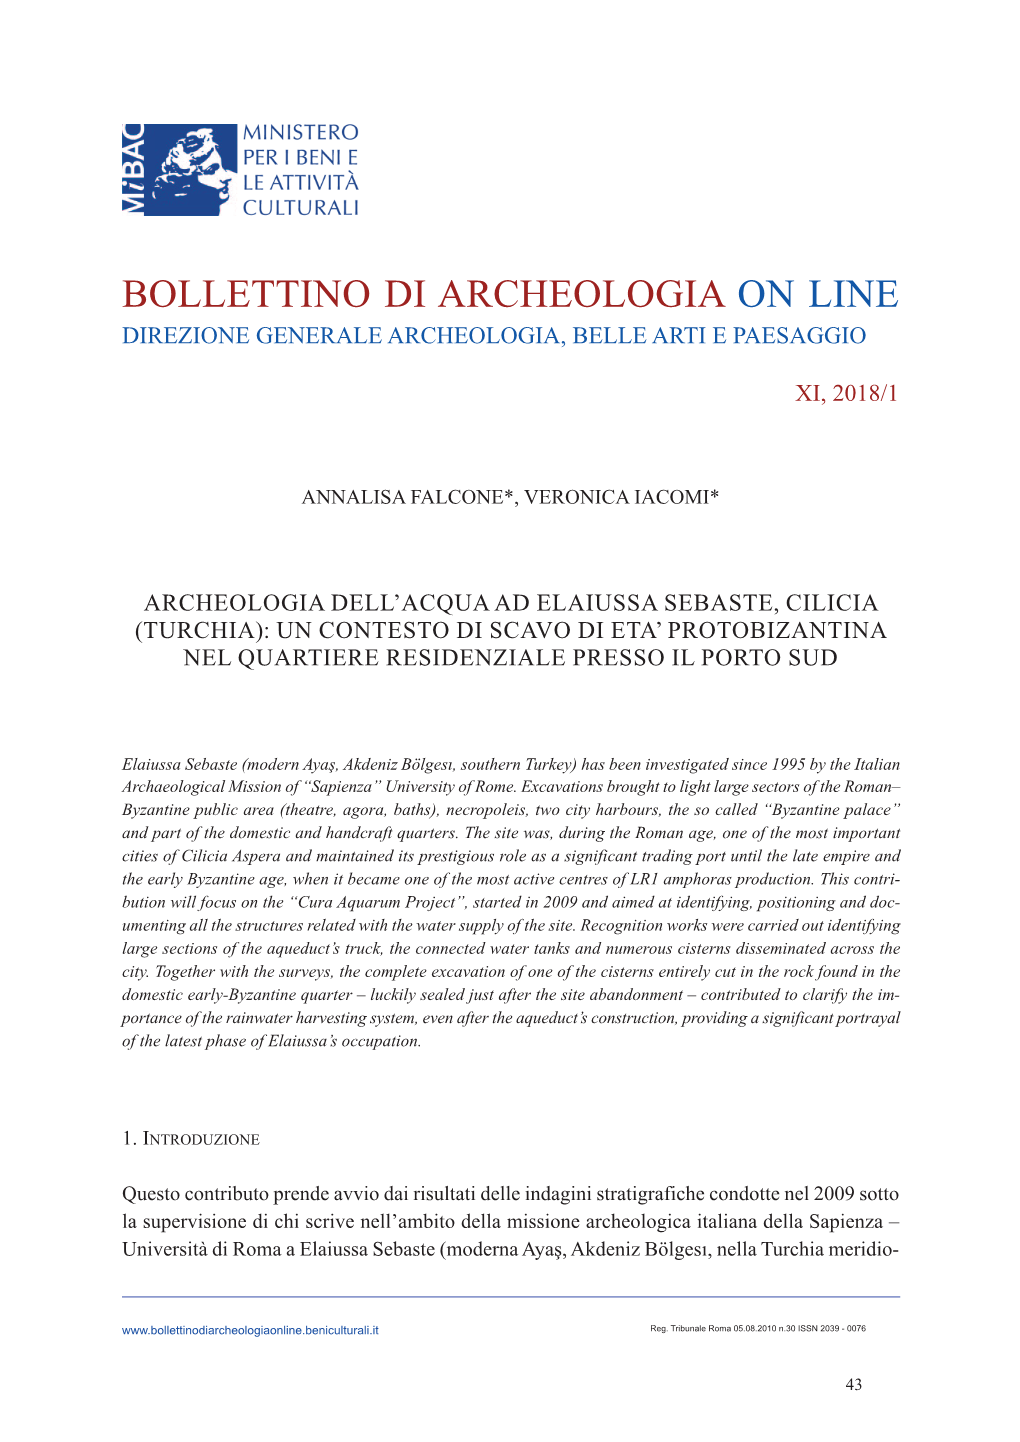 A. FALCONE, V. IACOMI – Archeologia Dell'acqua a Elaiussa